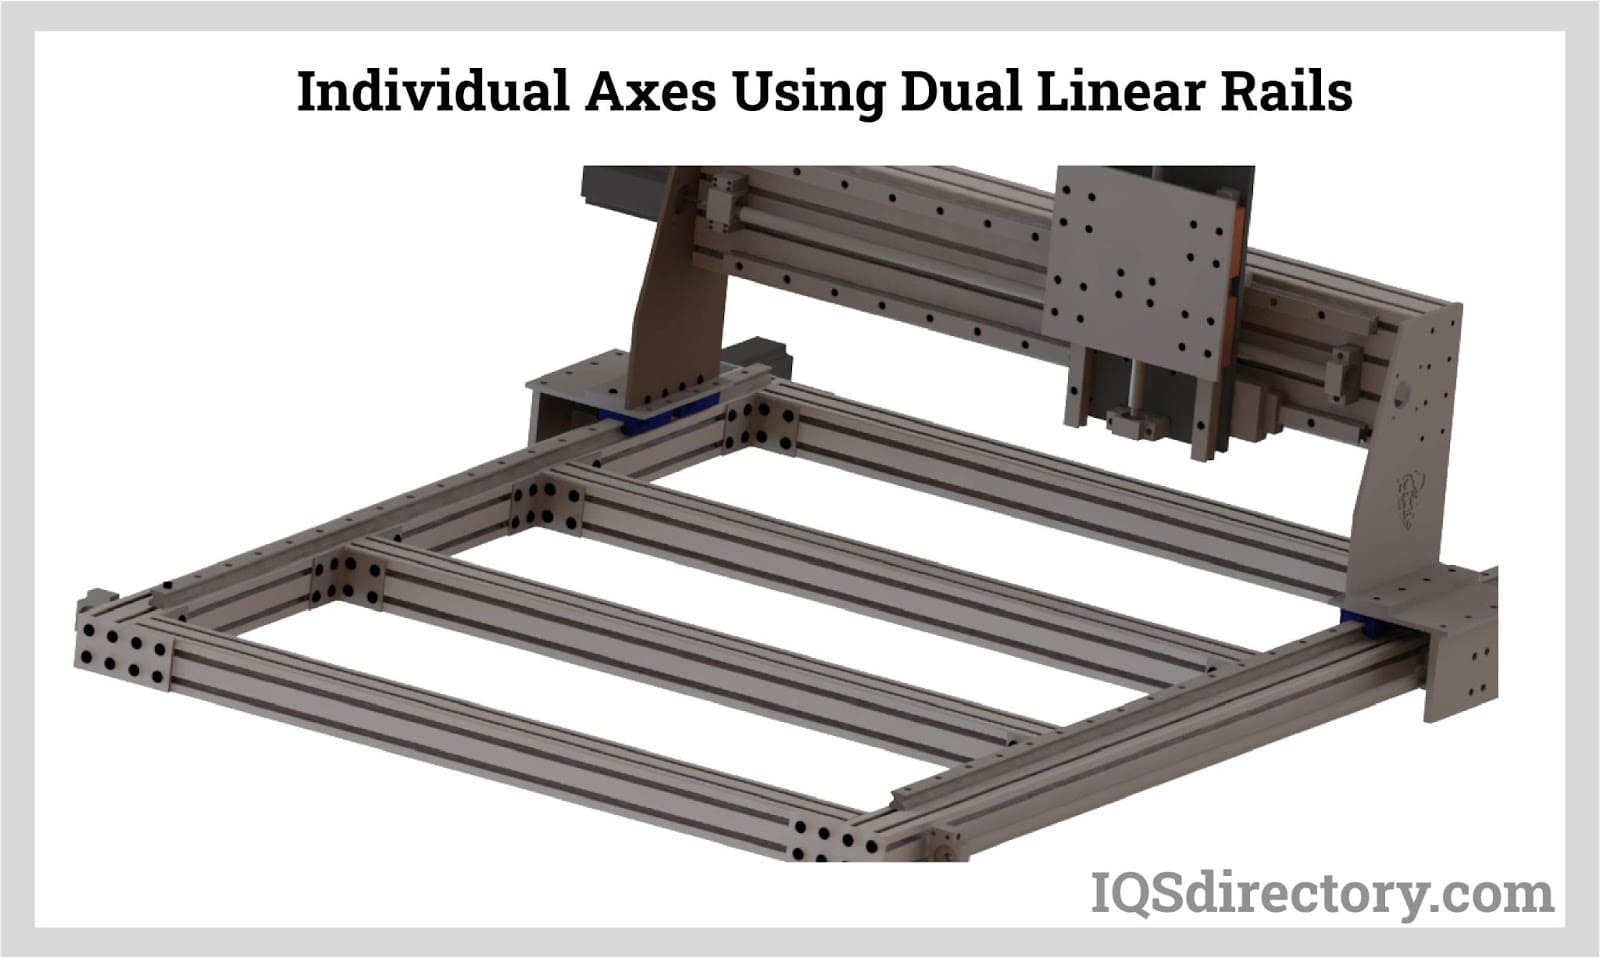 Individual Axes Using Dual Linear Rails (Ball Screw)